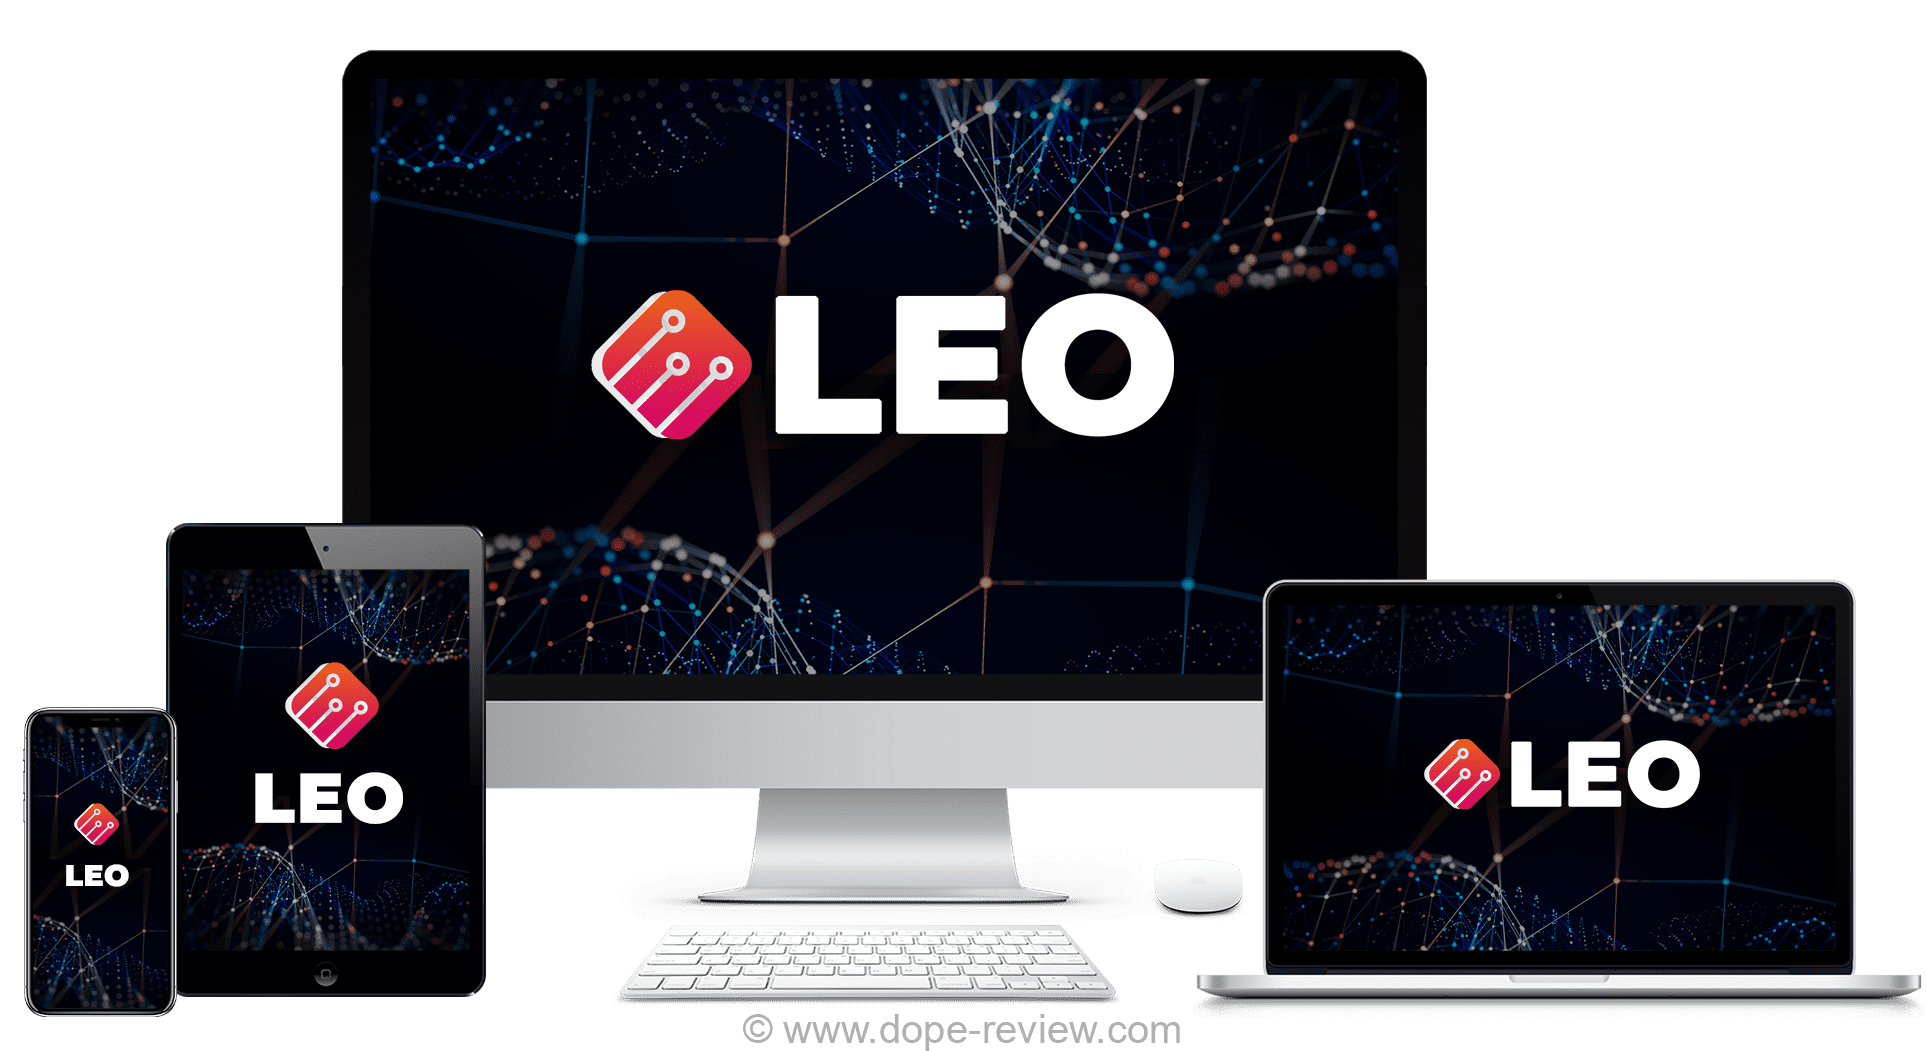 Leo App Review